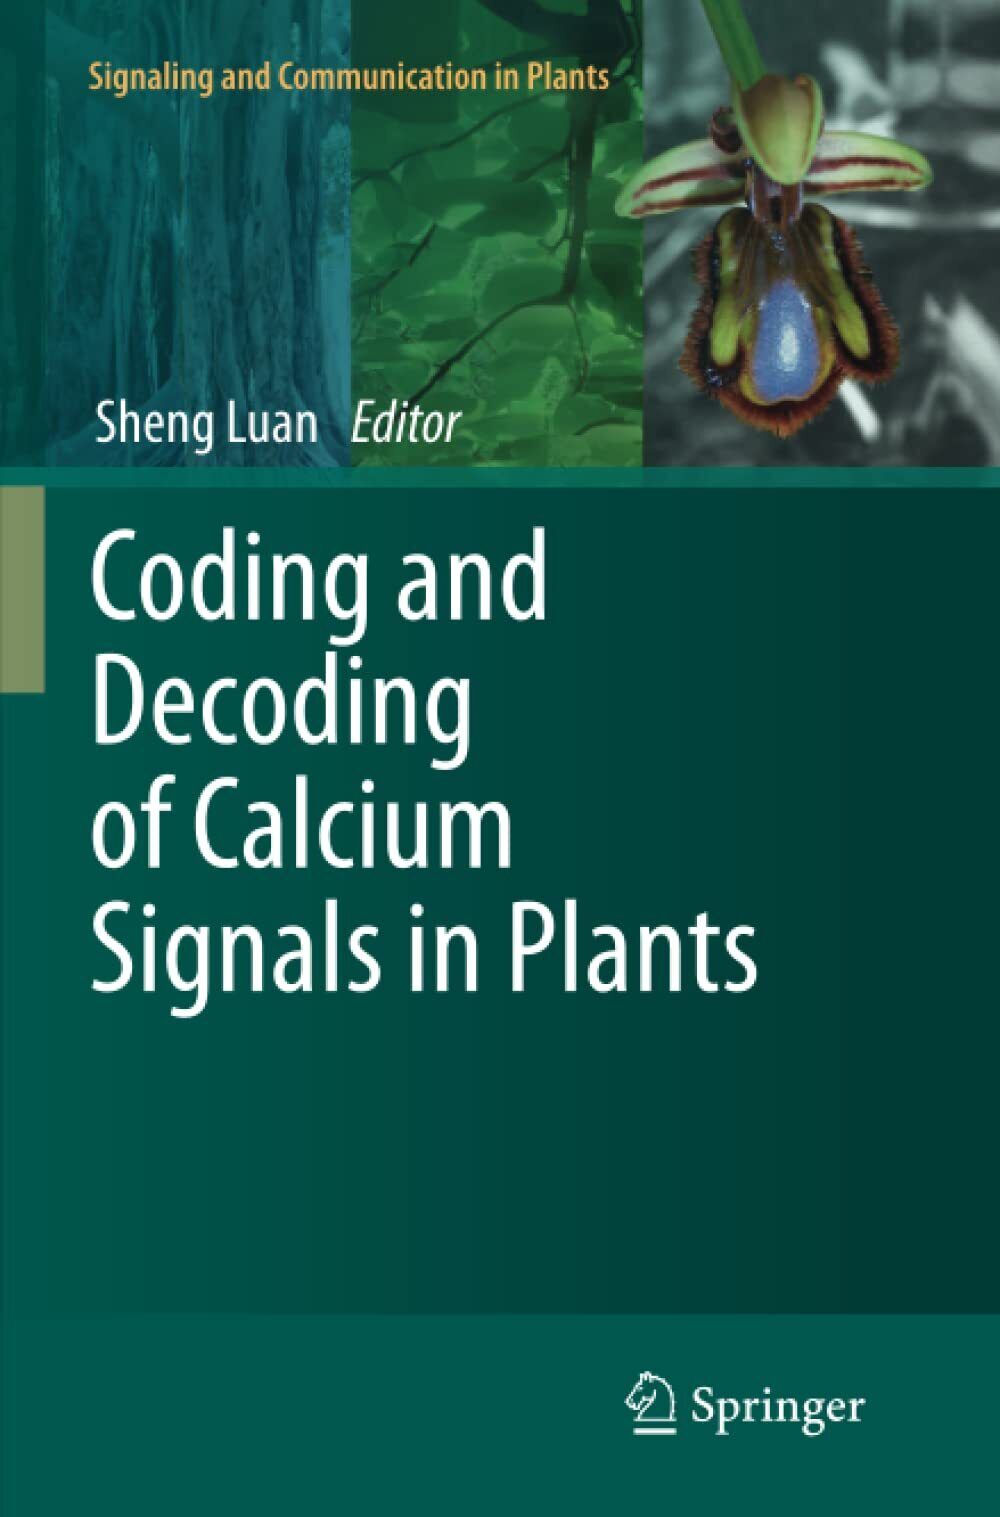 Coding and Decoding of Calcium Signals in Plants - Sheng Luan - Springer, 2013 libro usato